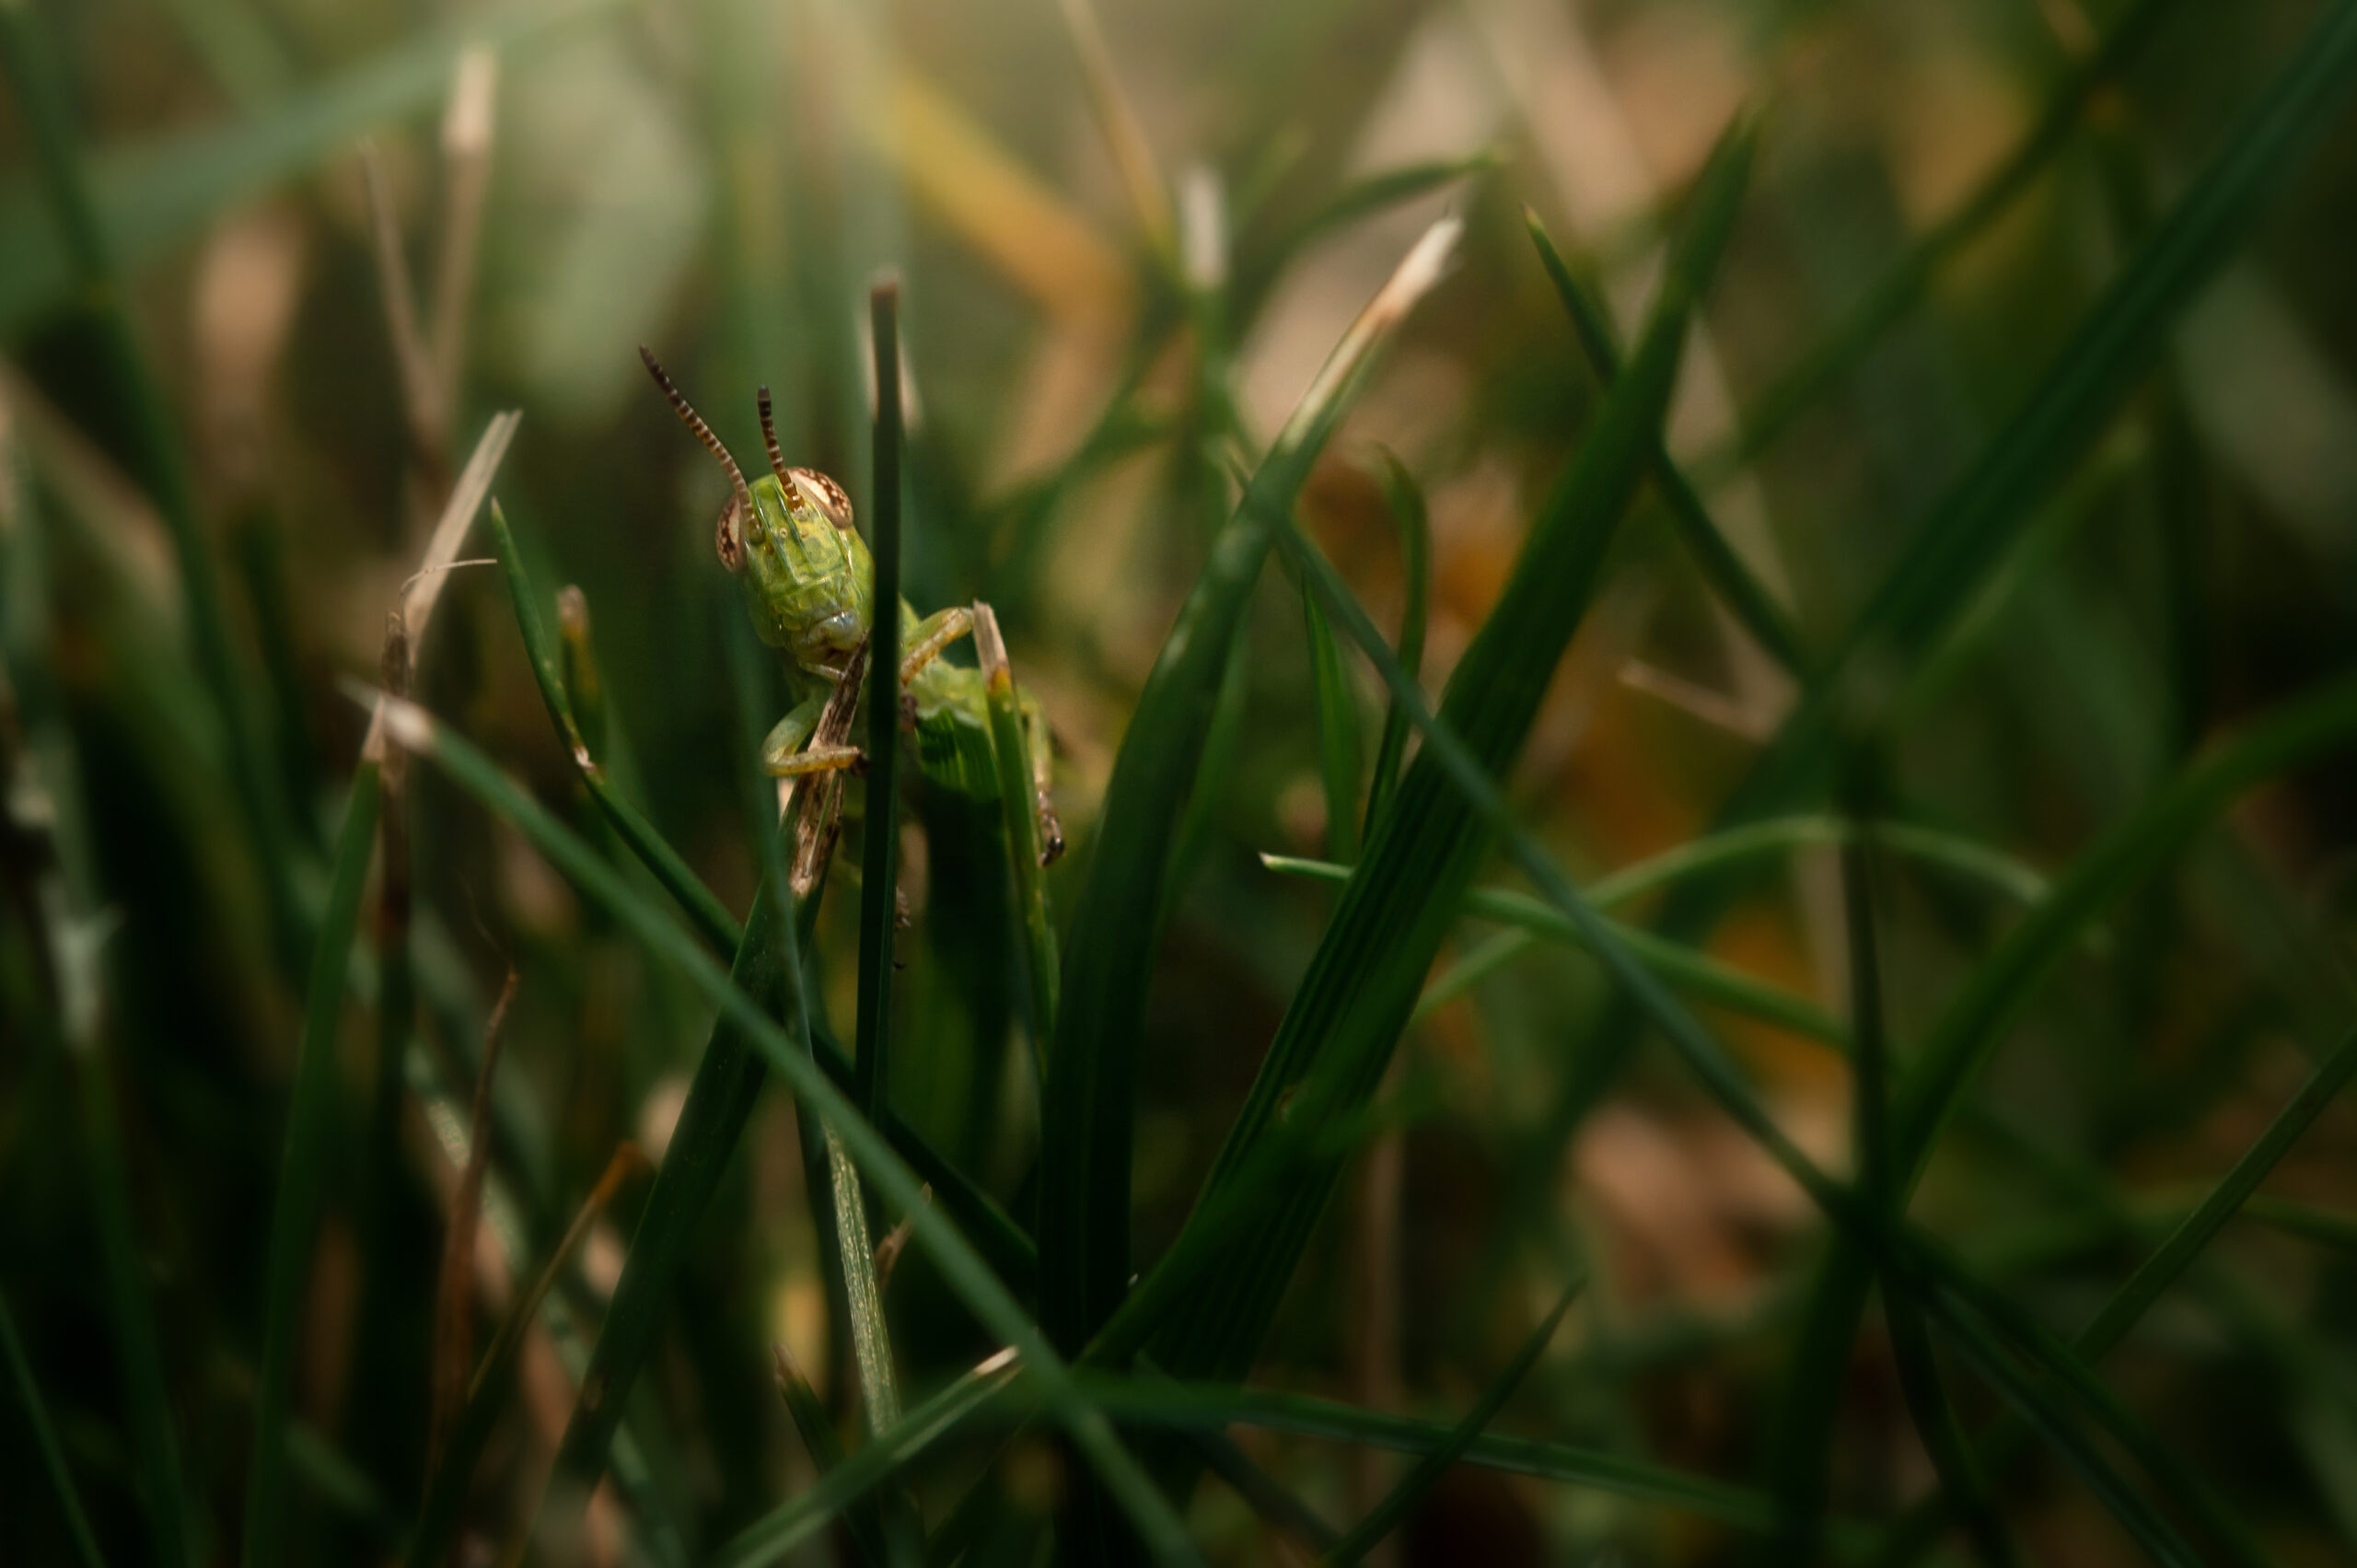 Grasshopper in the grass